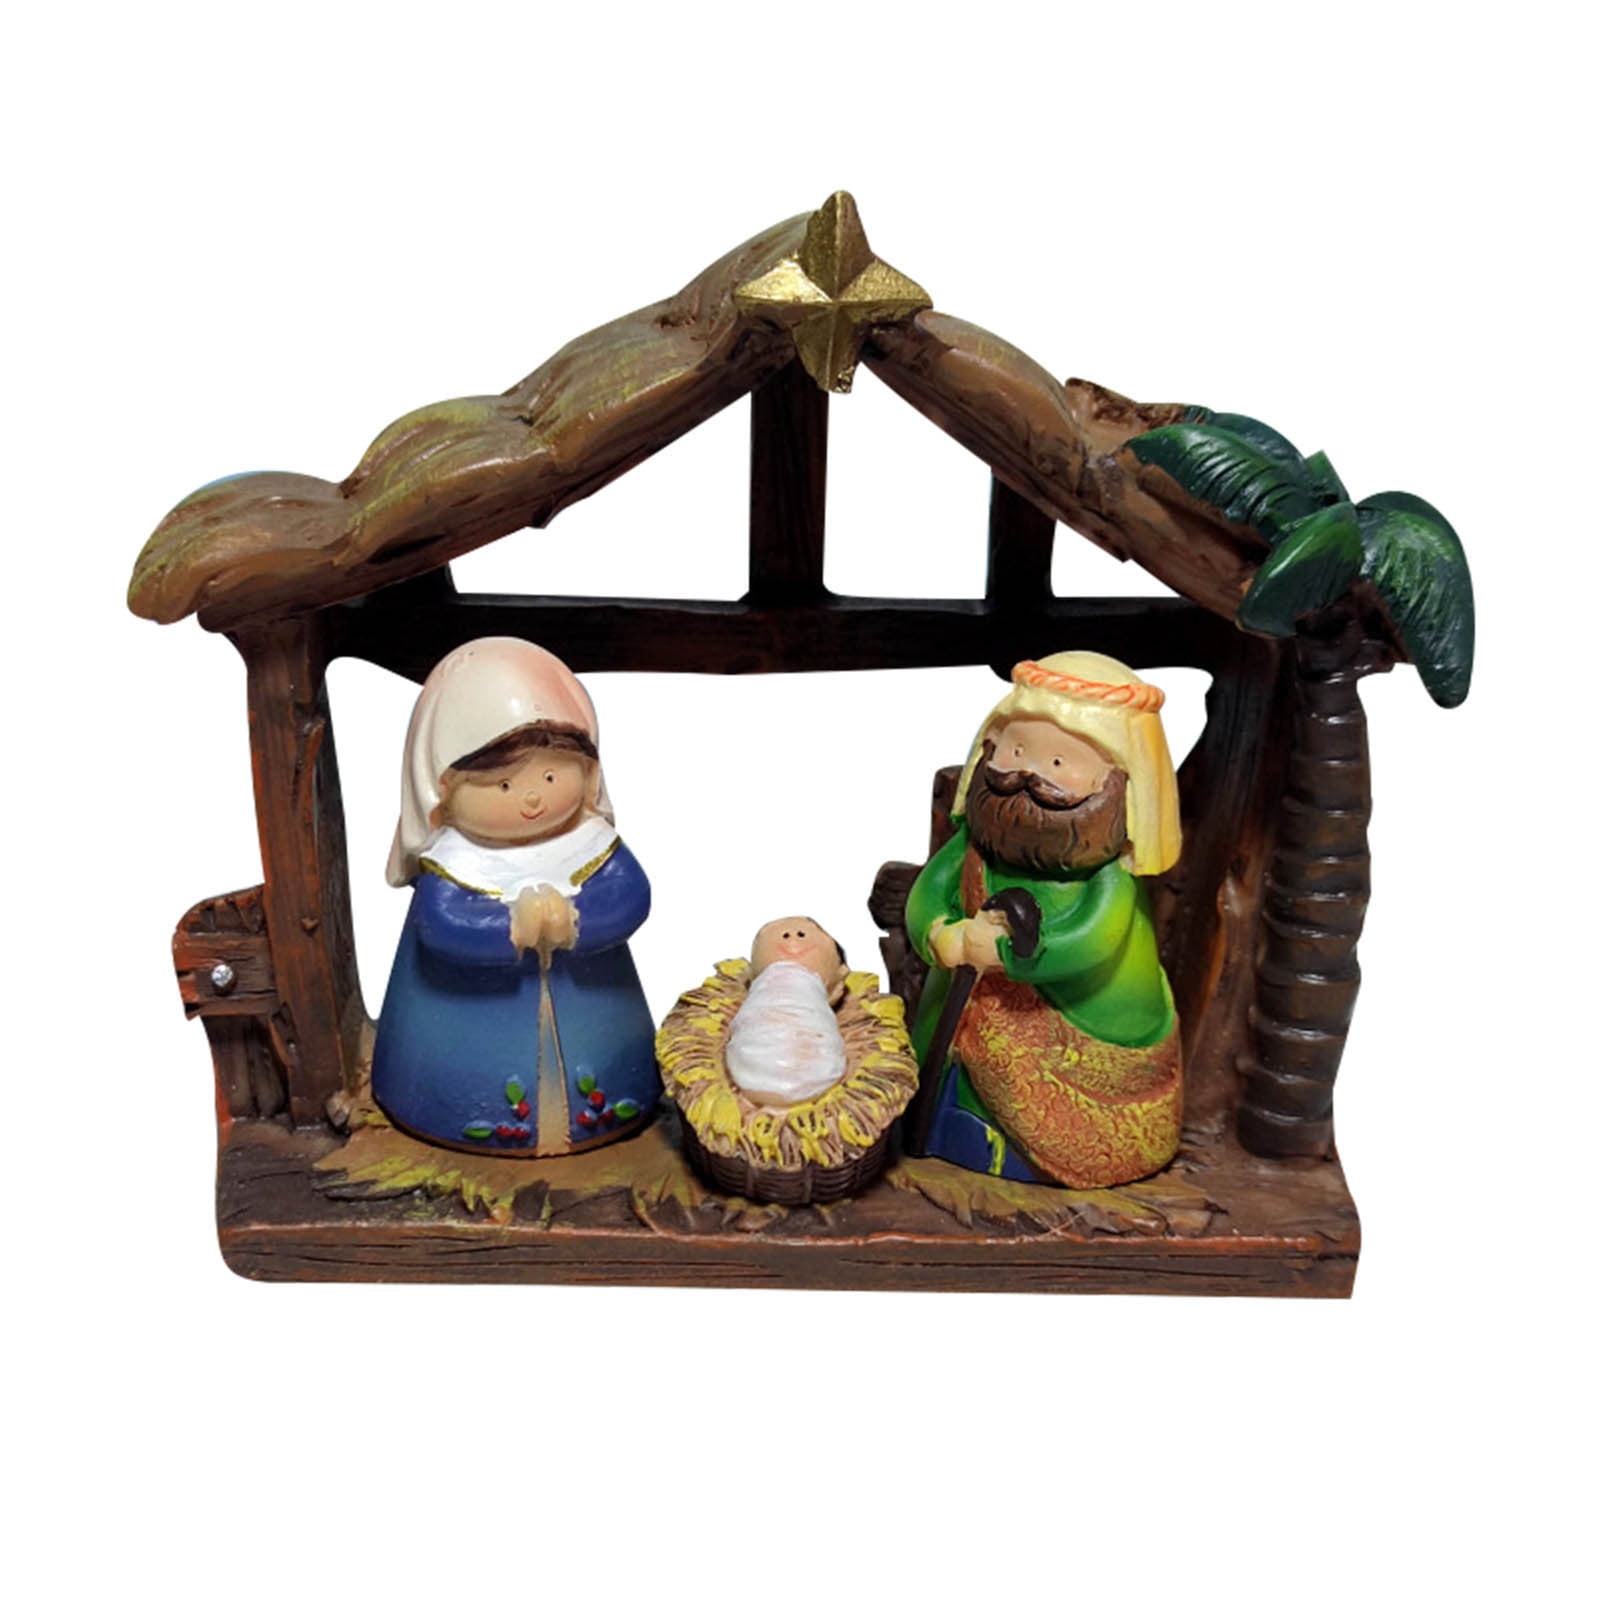 Details about   Rare Nativity Scene Musical Waterglobe Christmas Snow Globe Christmas 